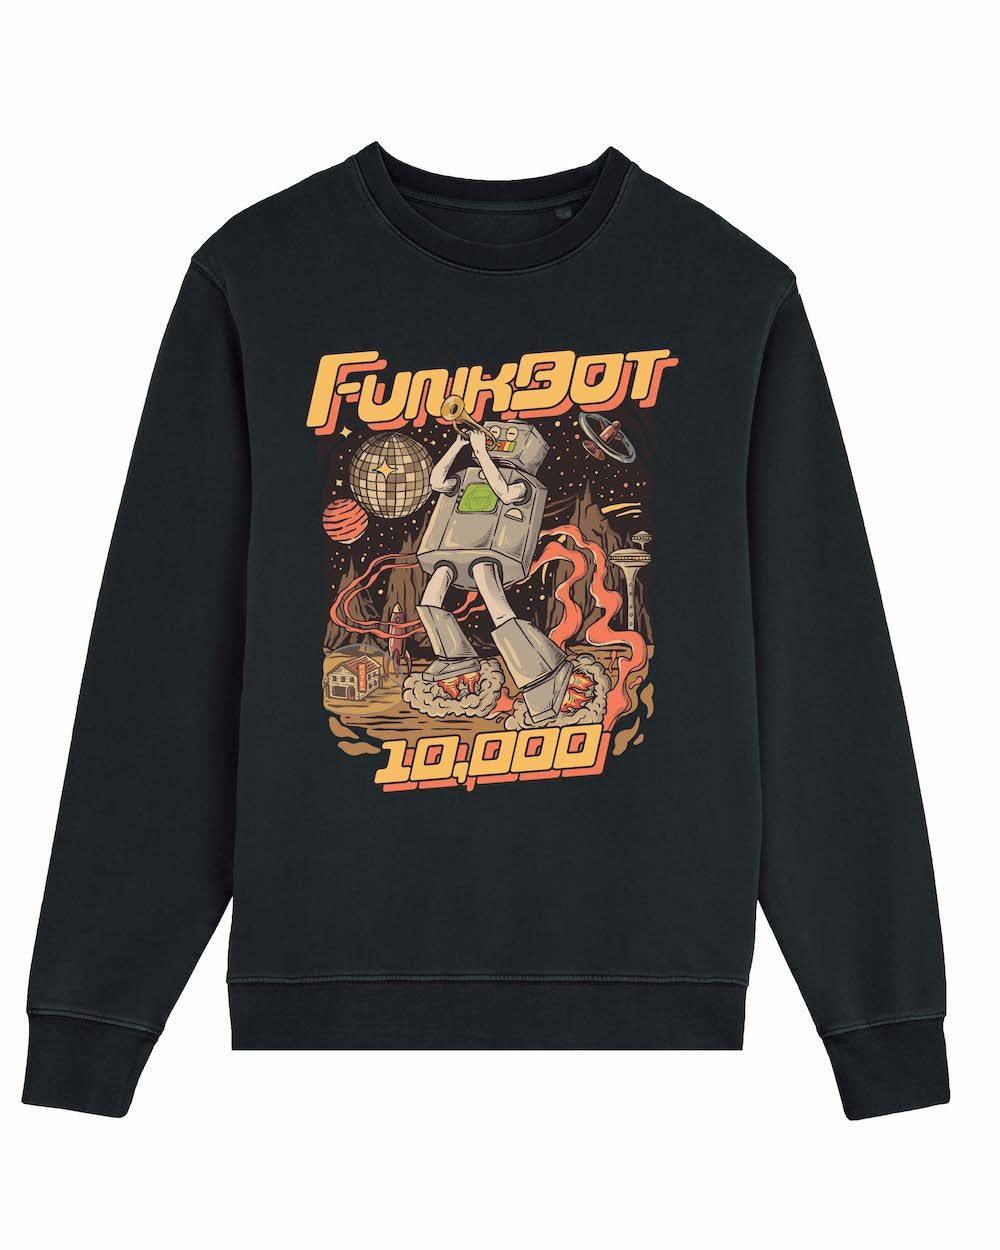 Funkbot Sweatshirt (Off-White or Black)